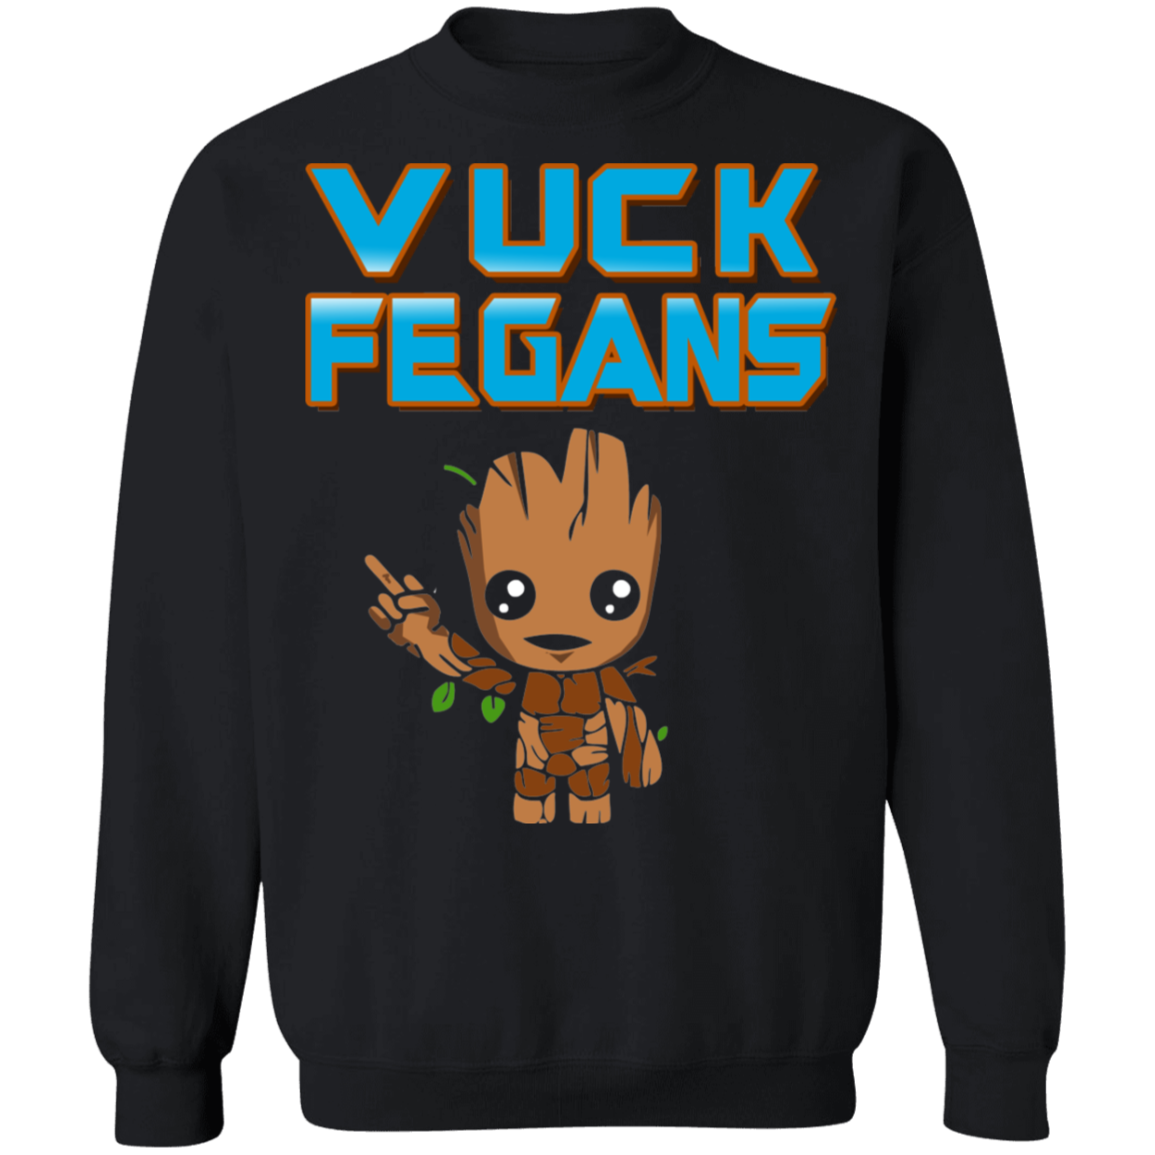 ArtichokeUSA Custom Design. Vuck Fegans. 85% Go Back Anyway. Groot Fan Art. Crewneck Pullover Sweatshirt